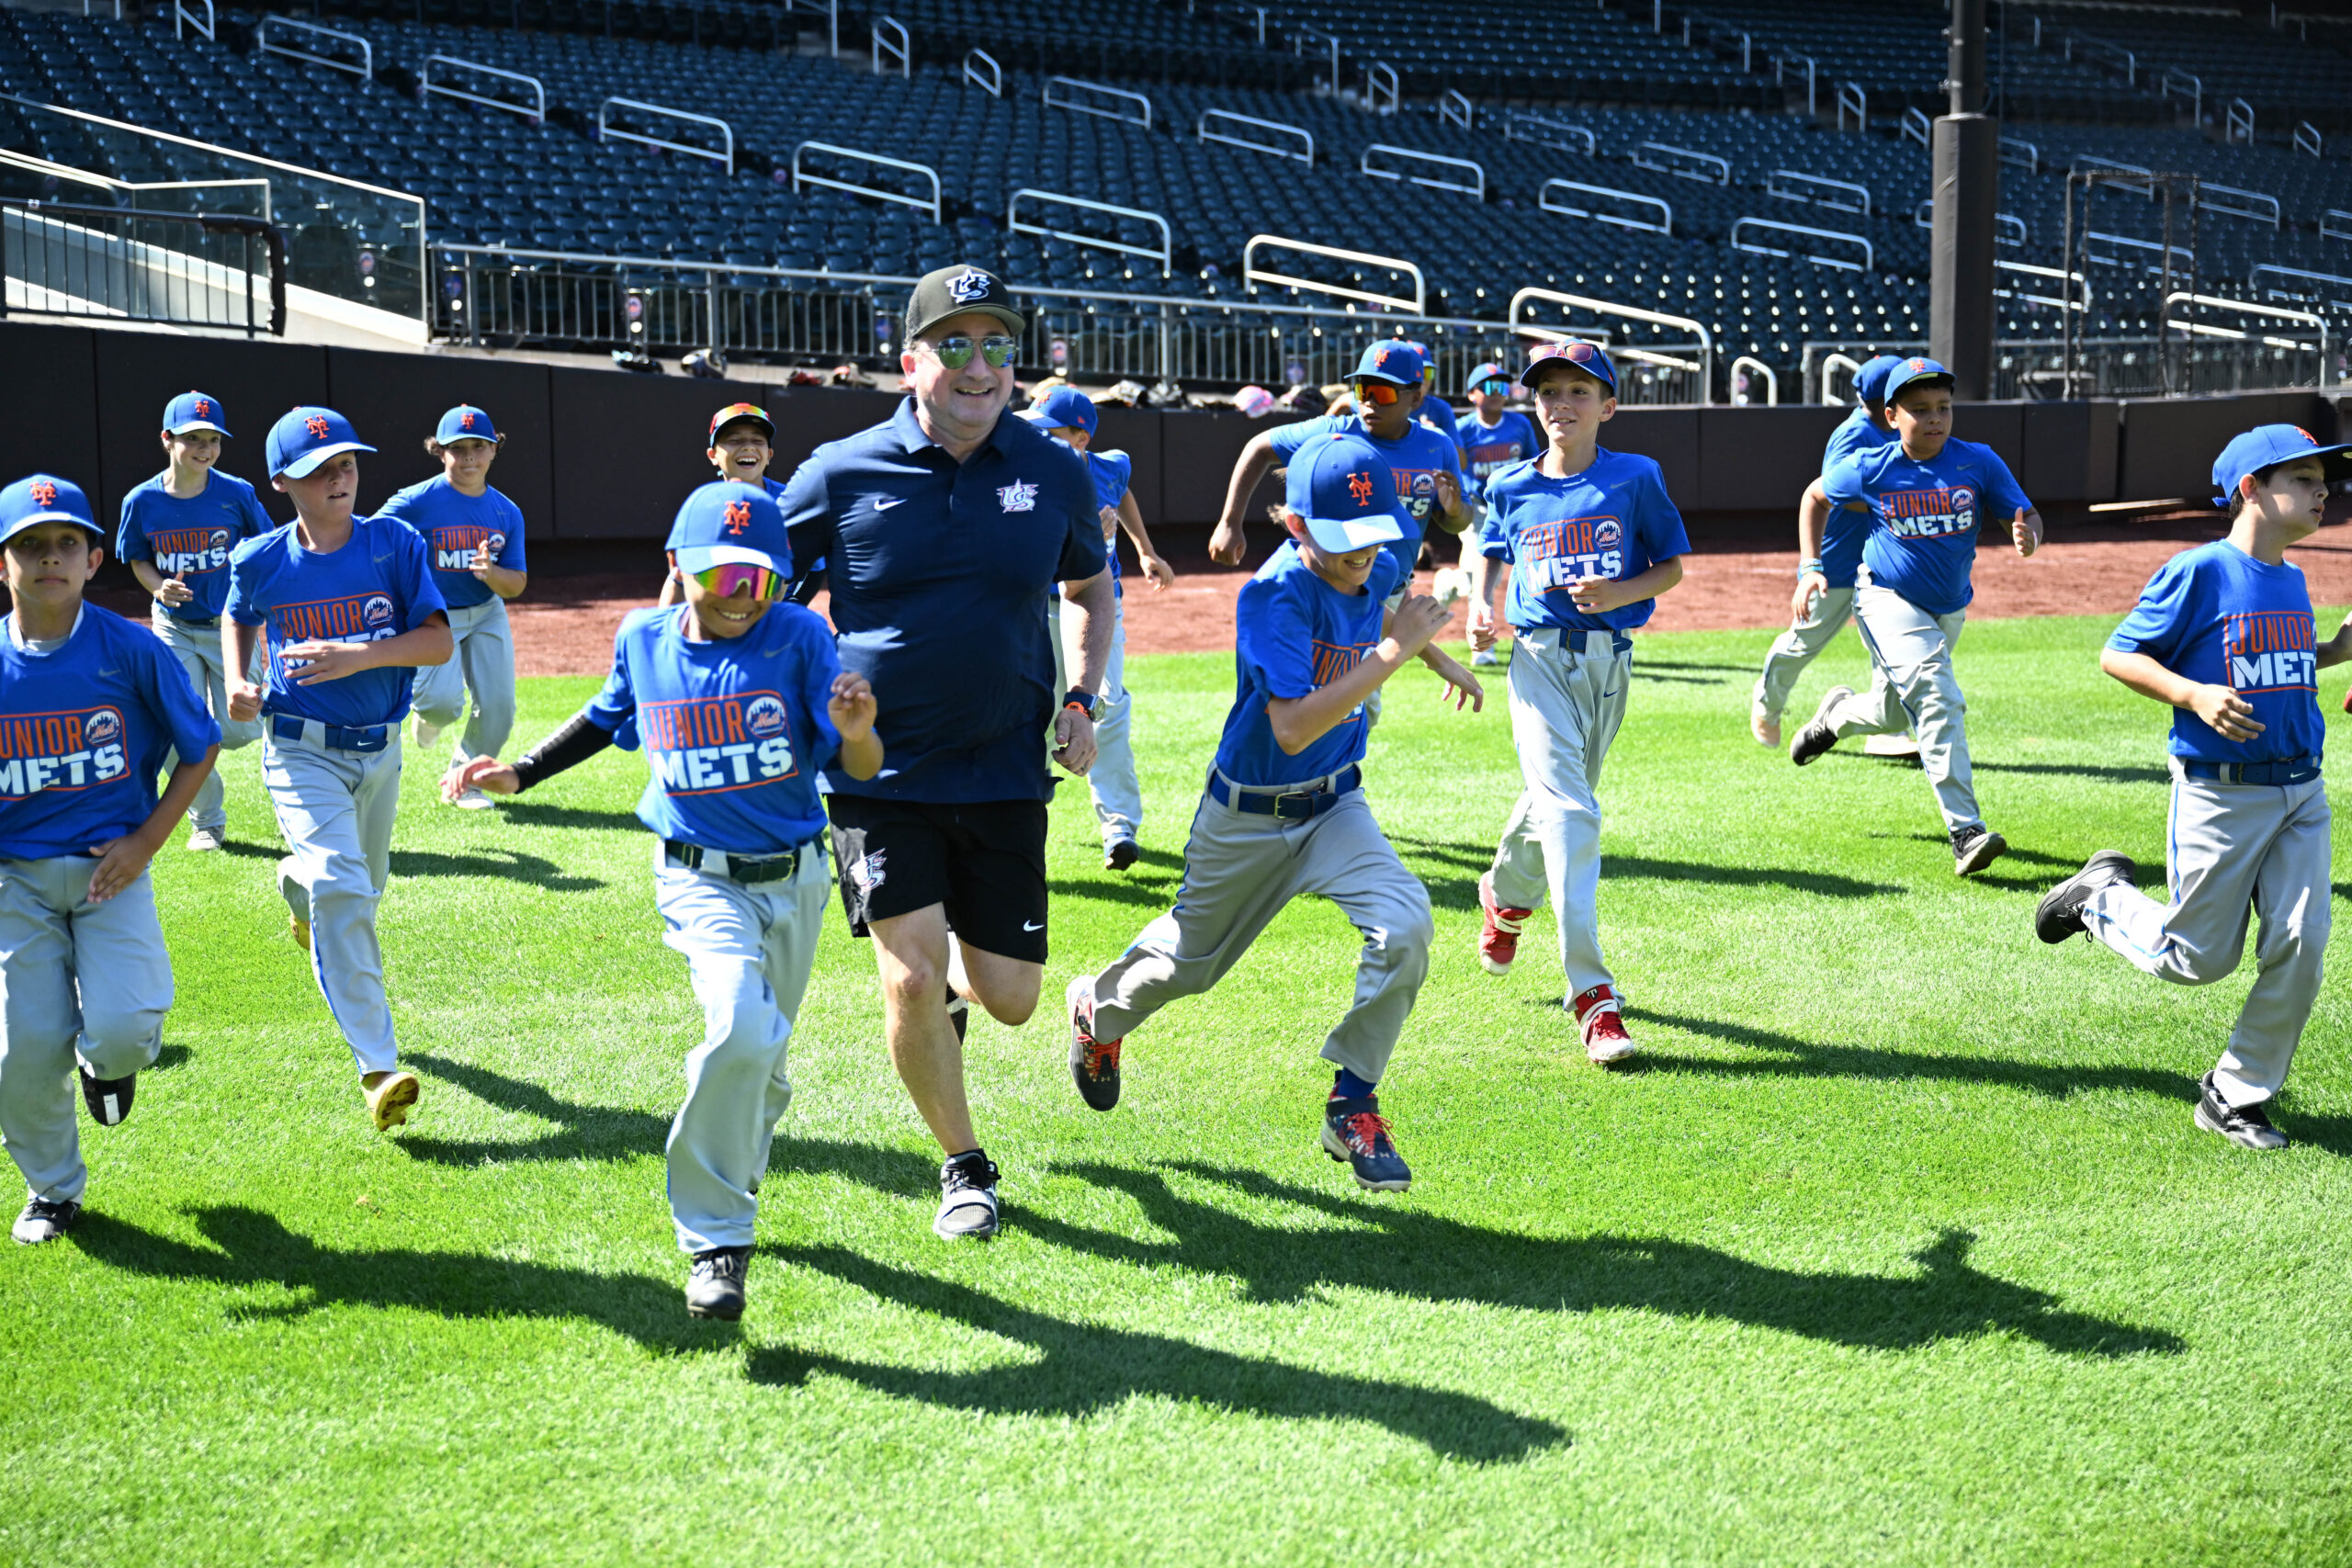 Baseball & Athletics  The Amazin' Mets Foundation